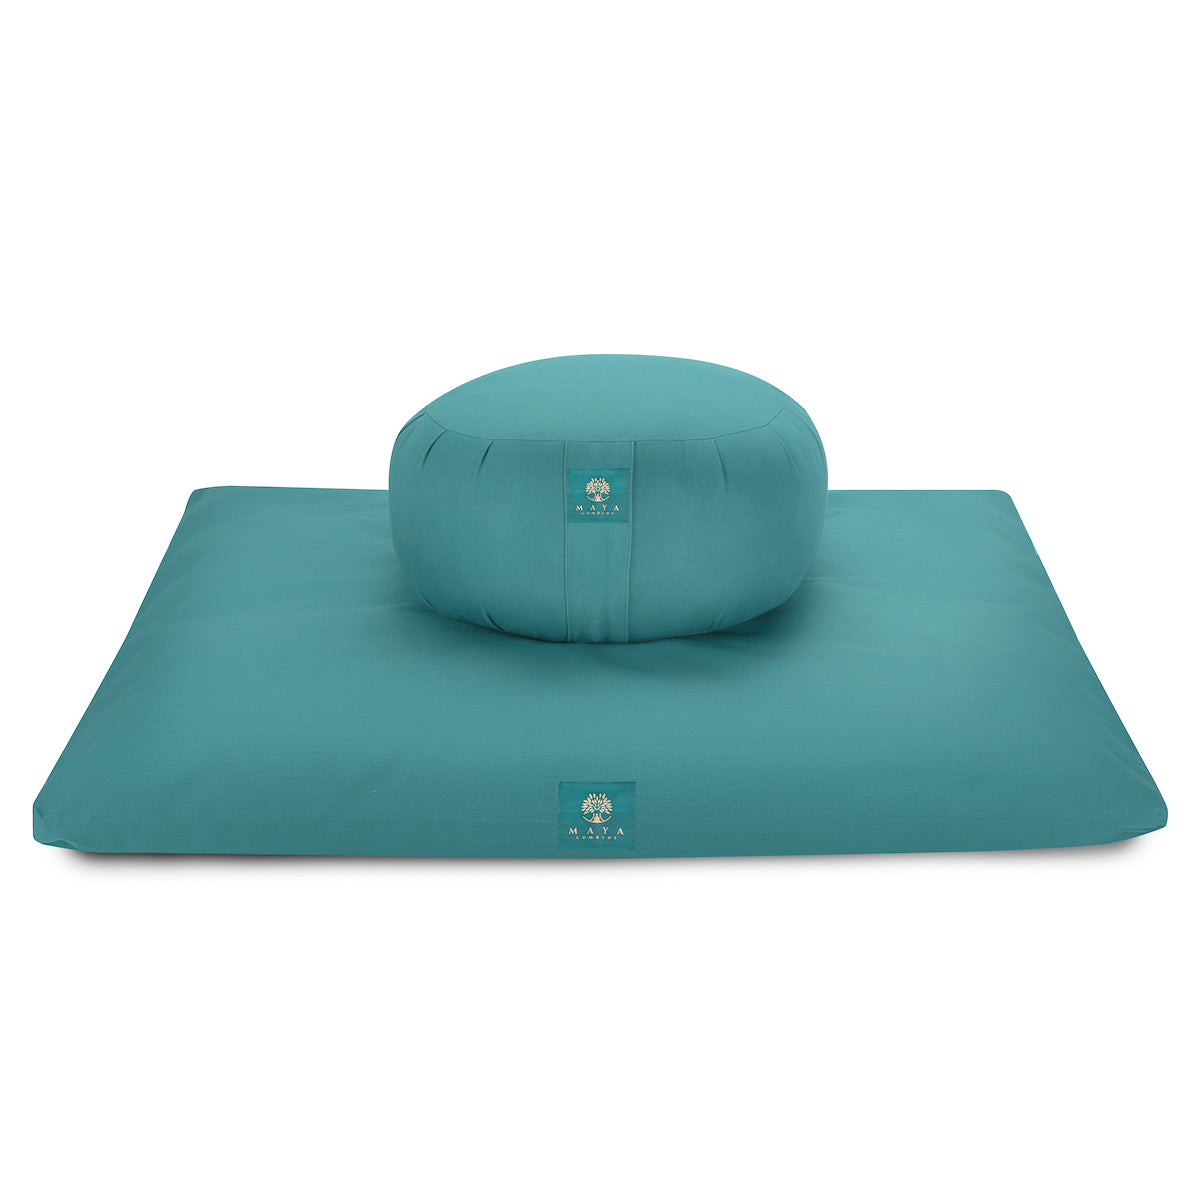 'The Comfier' Organic Kapok Meditation Cushion Set